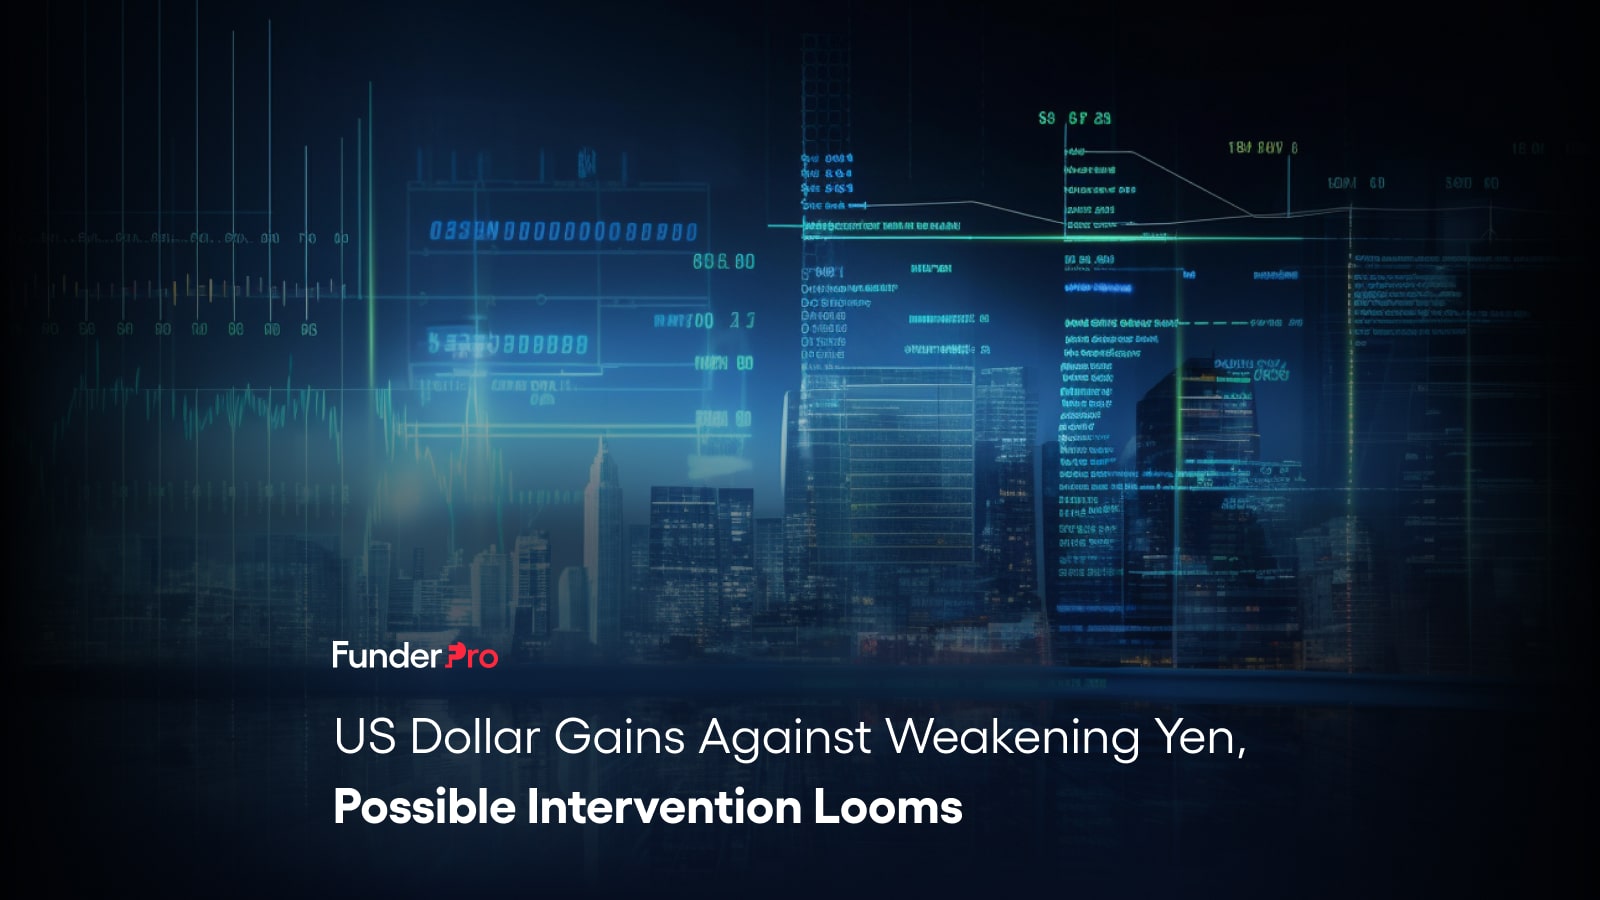 US Dollar Gains Against Weakening Yen as Possible Intervention Looms